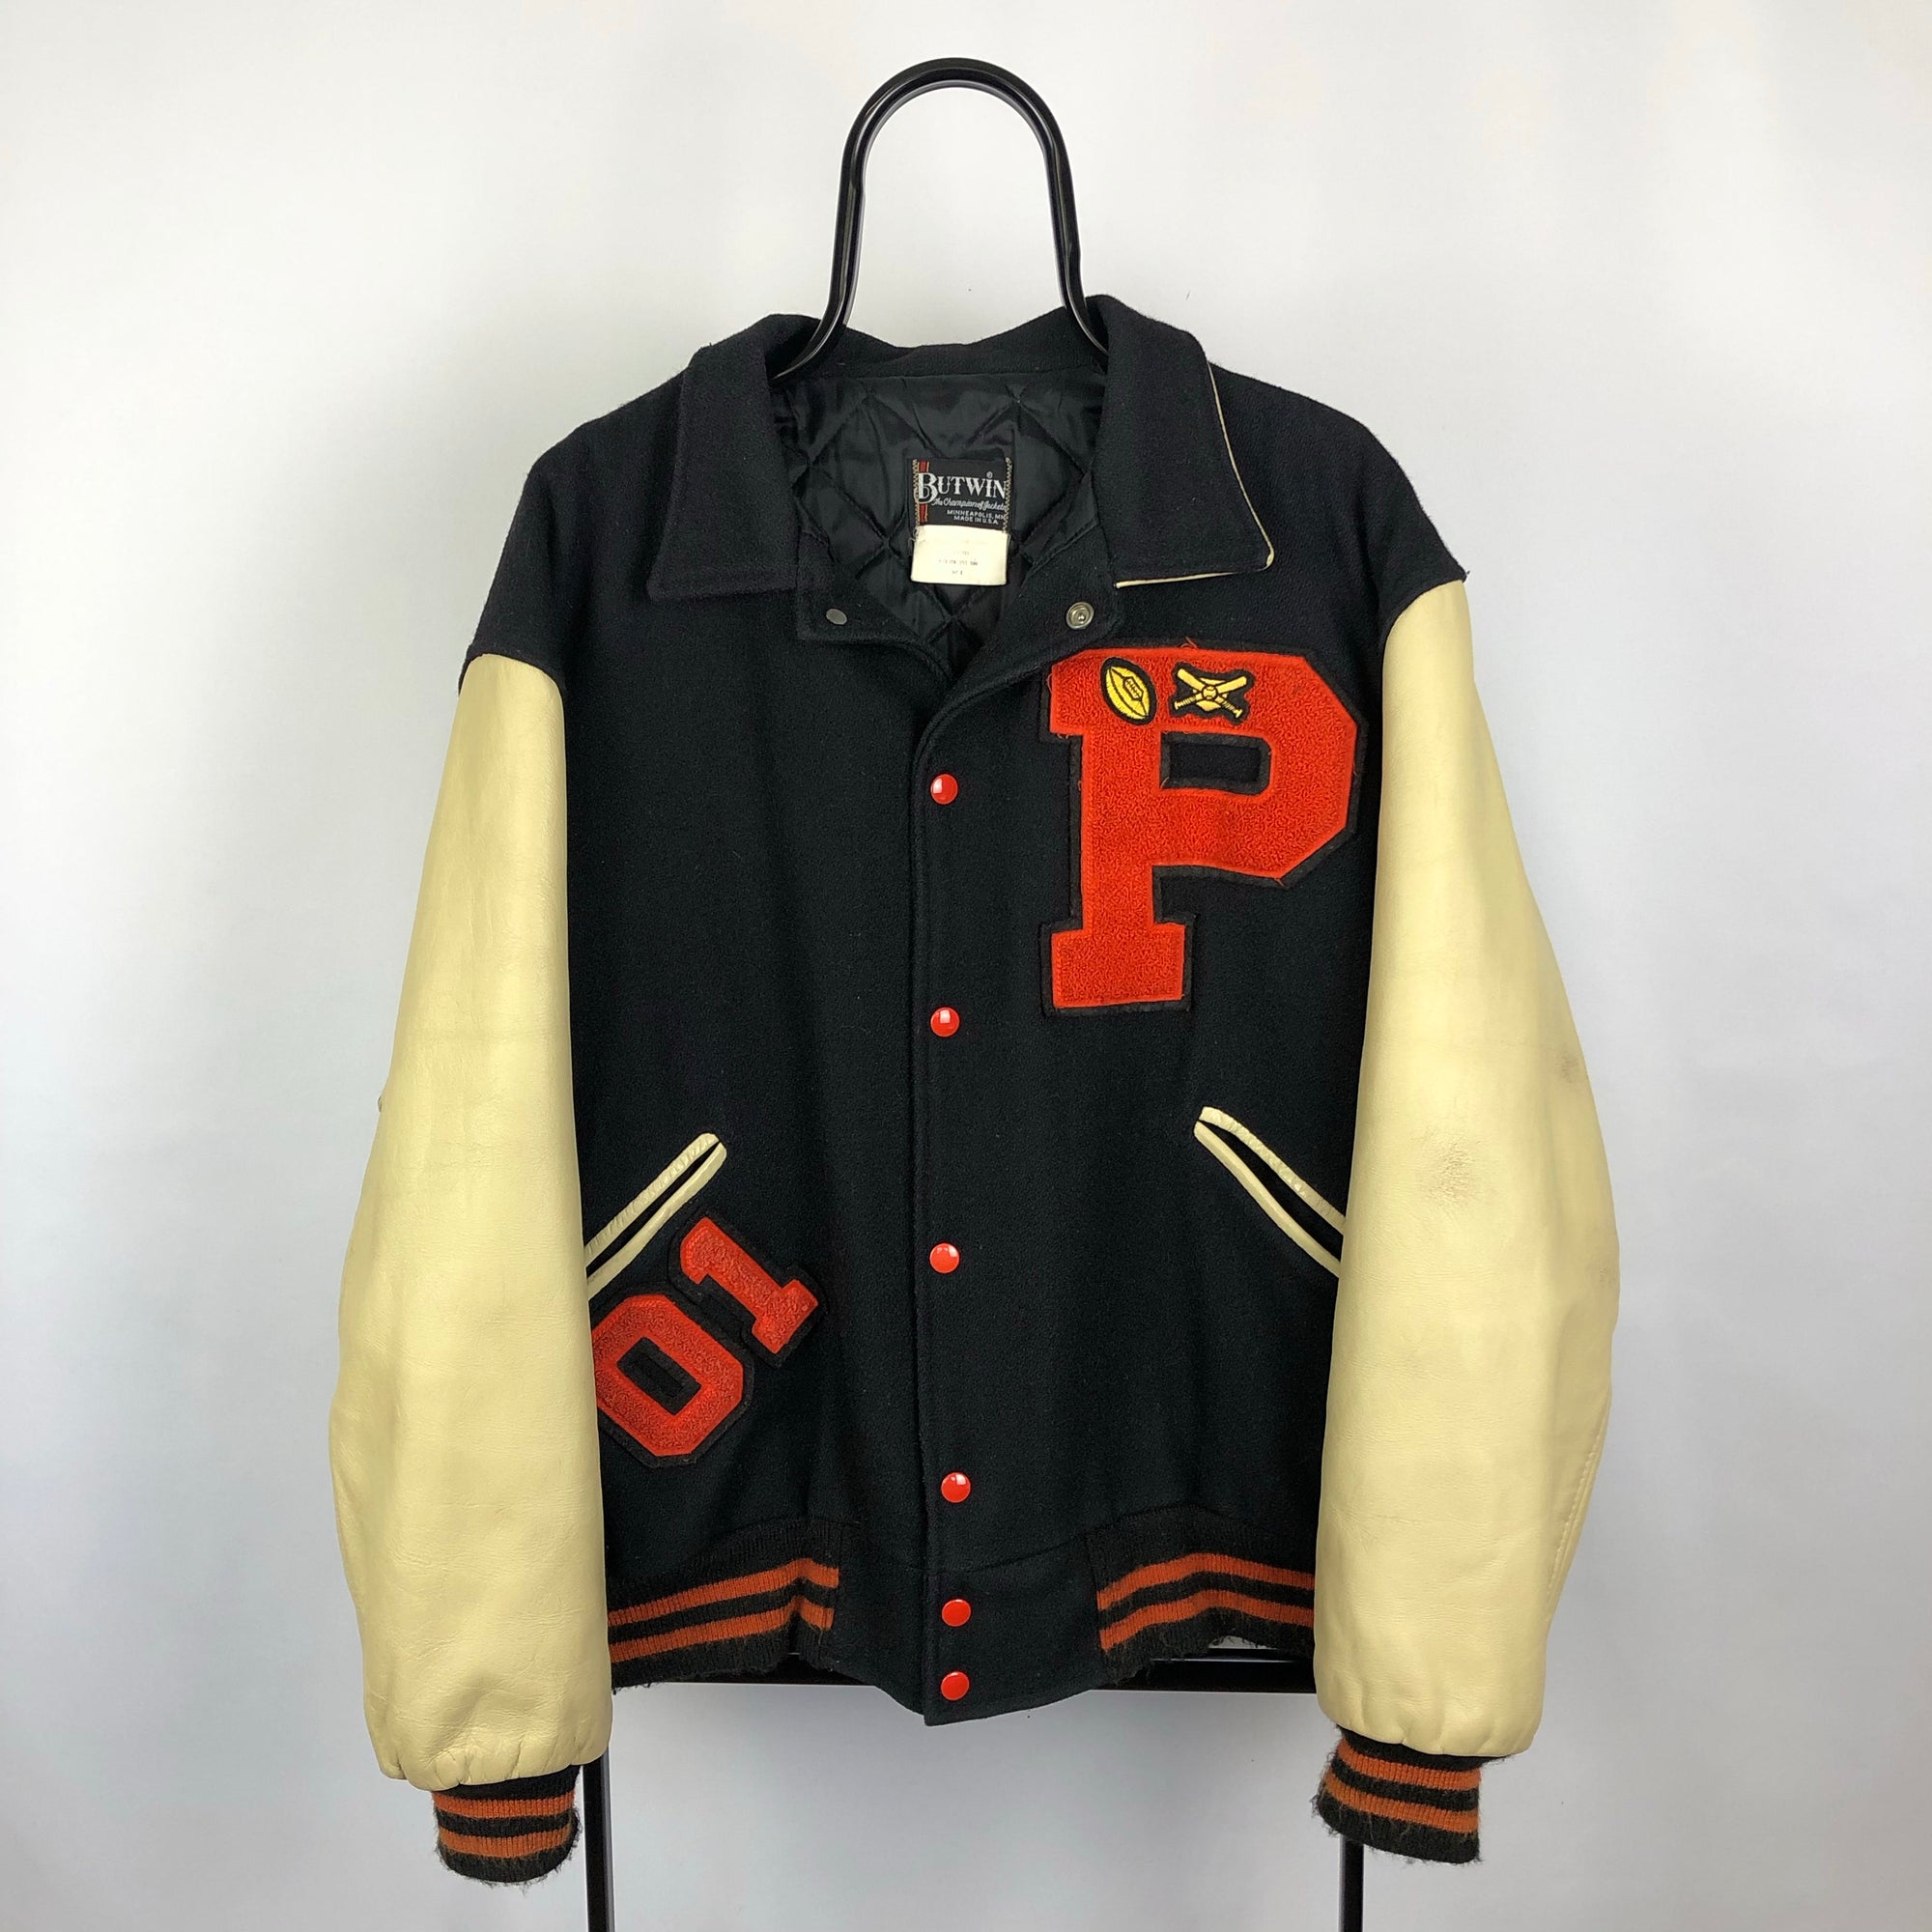 Vintage Varsity Jacket in Black & Orange - Men’s XL/Women’s XXL